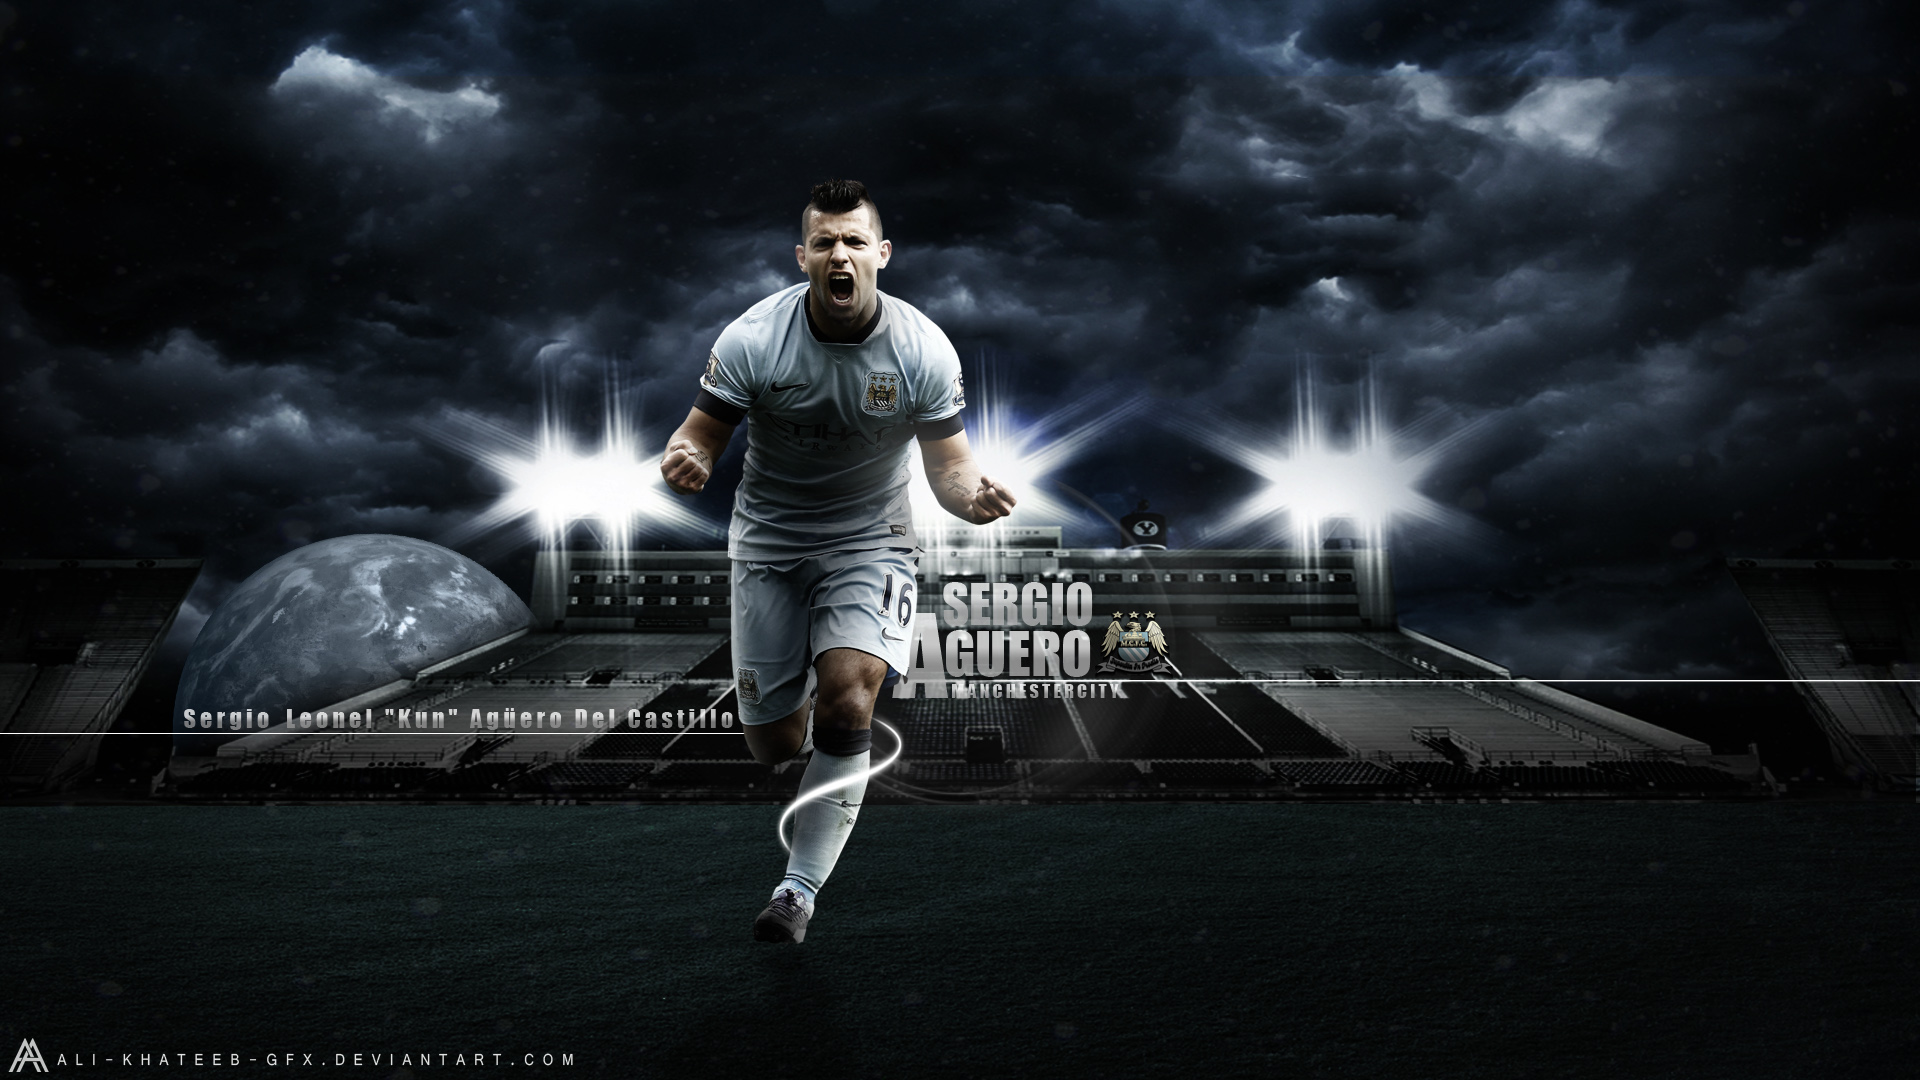 Download Sergio Aguero Manchester City Player HD Wallpaper Search